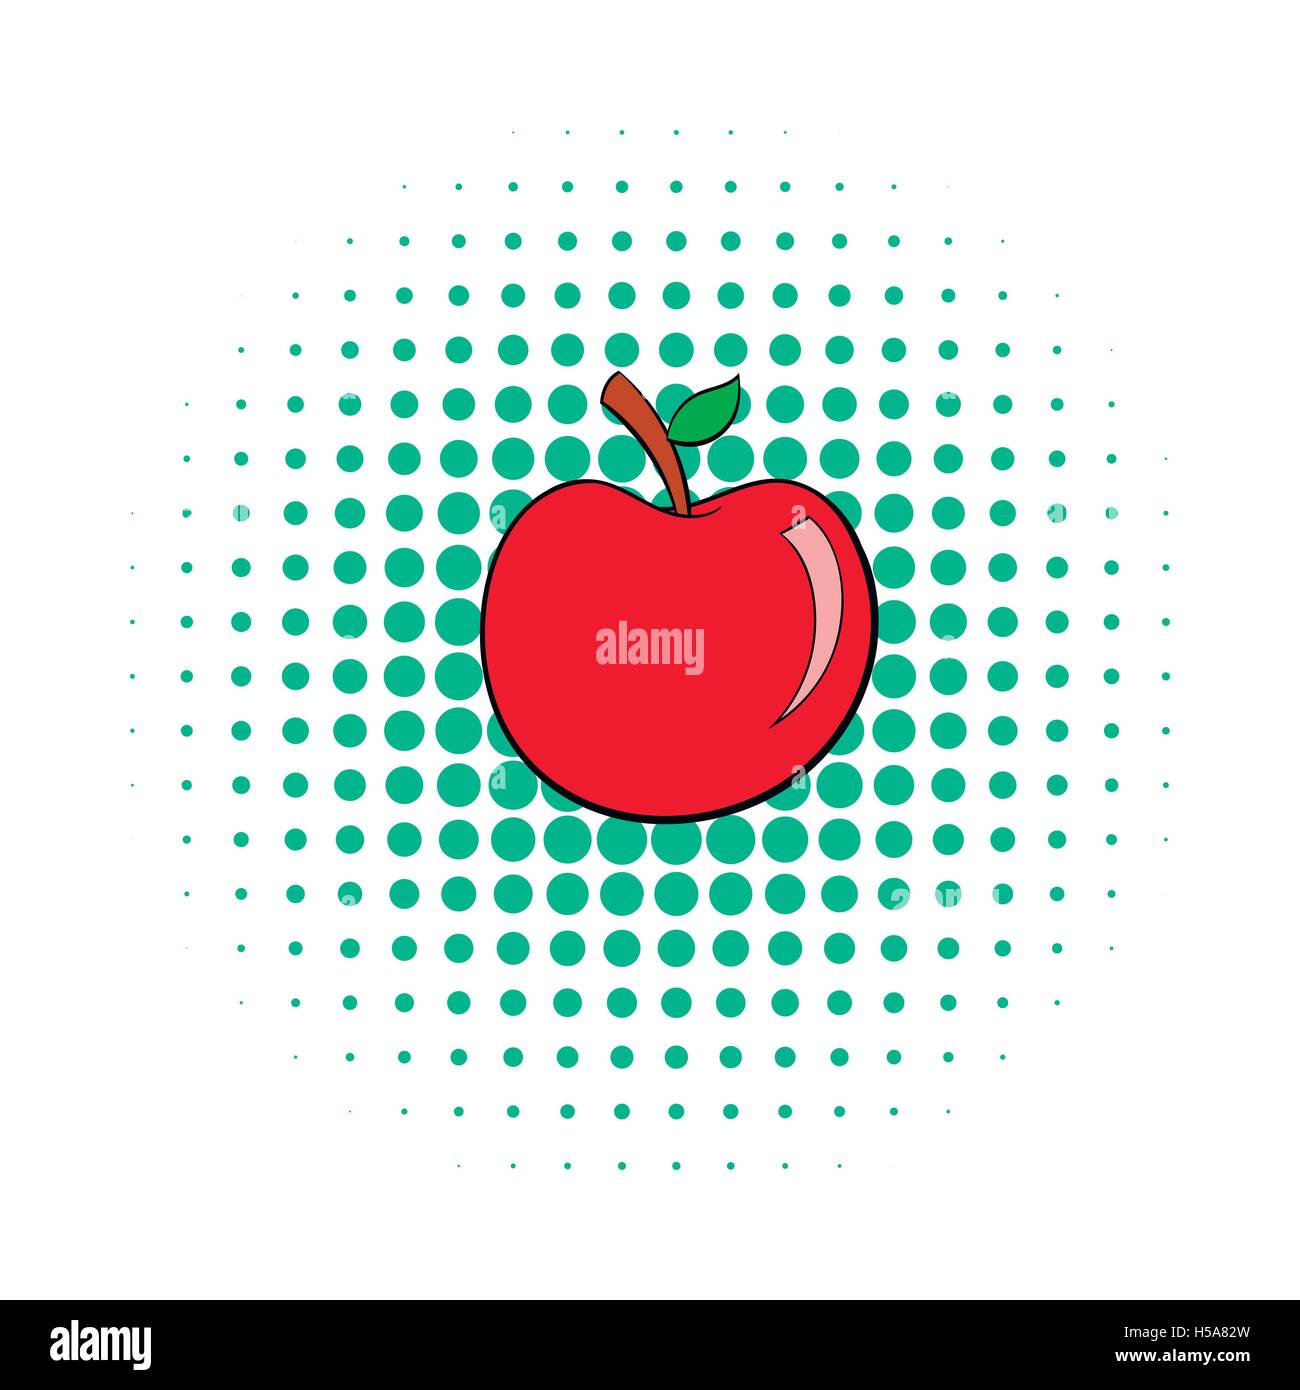 pop art apple